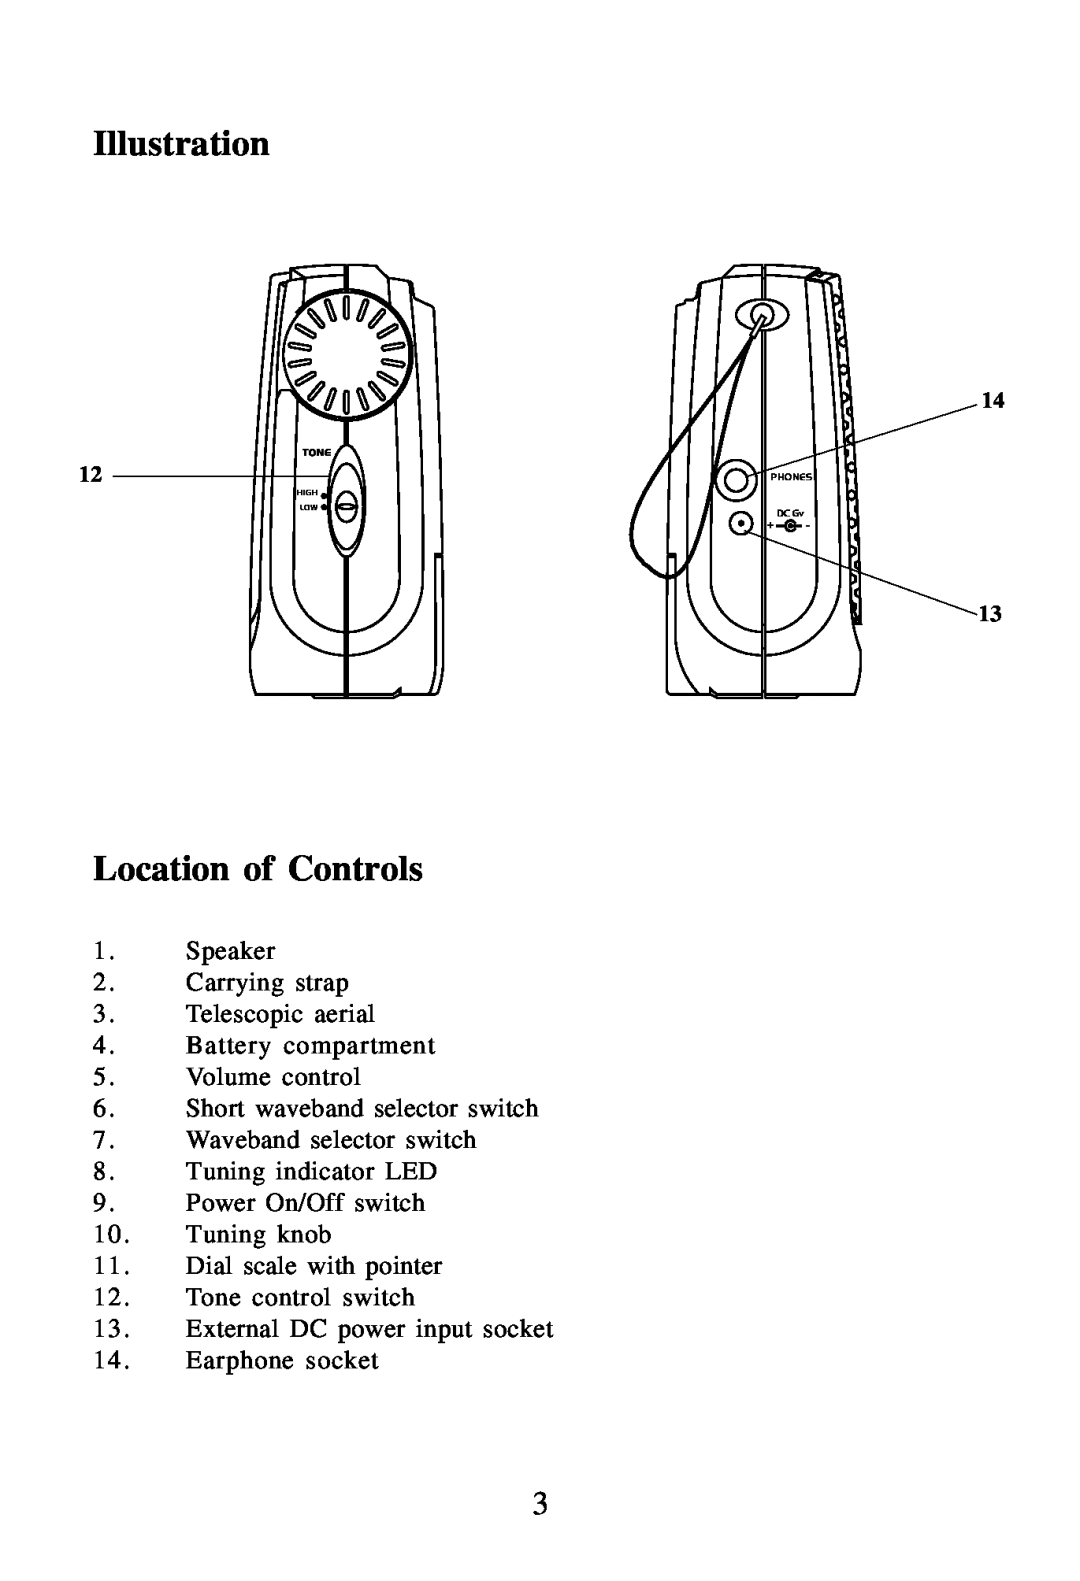 Morphy Richards Radio operating instructions Location of Controls, Illustration, Speaker 